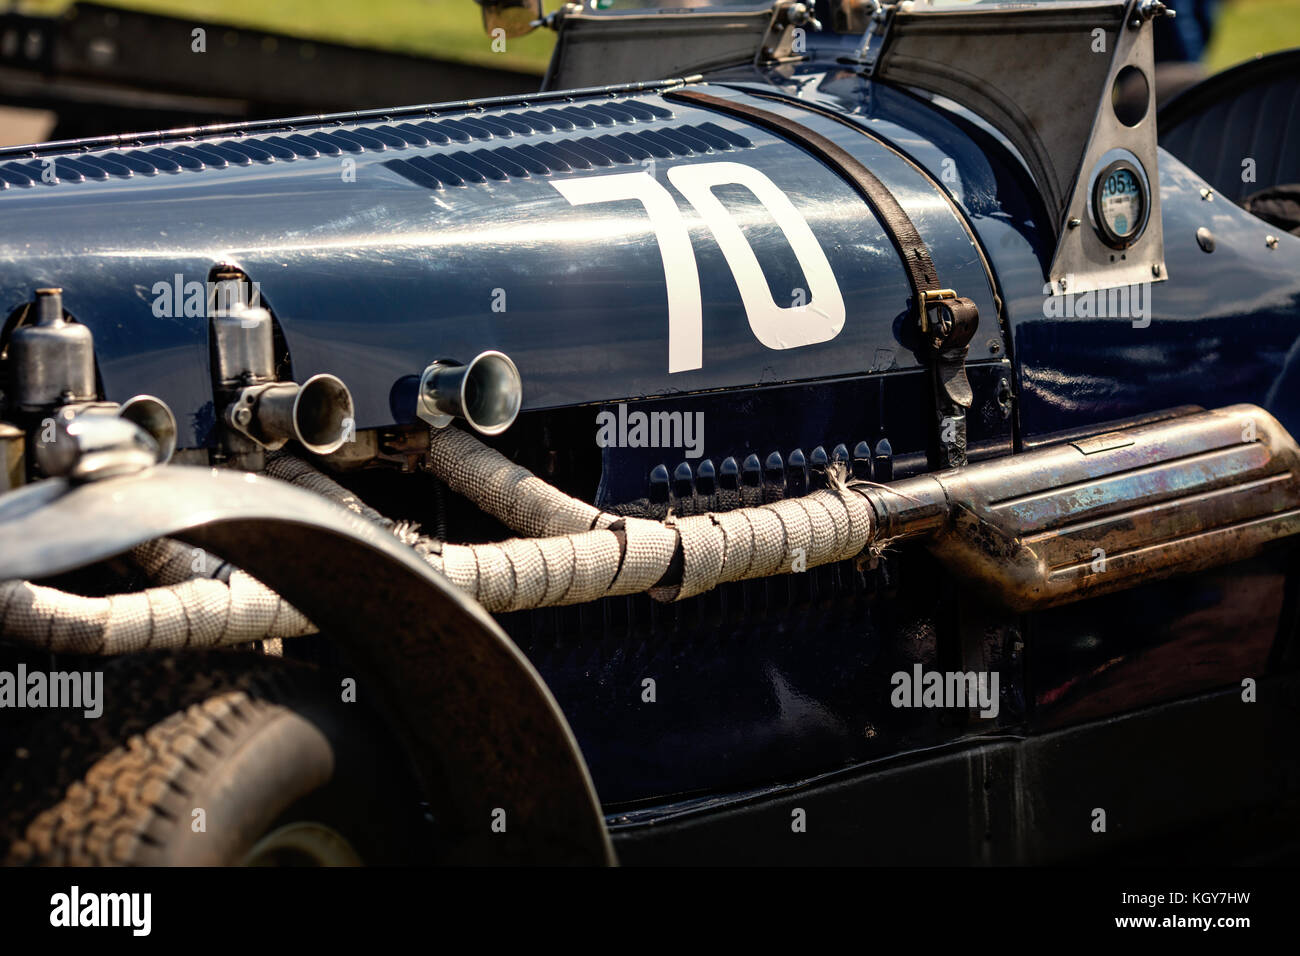 old classic racing car Stock Photo